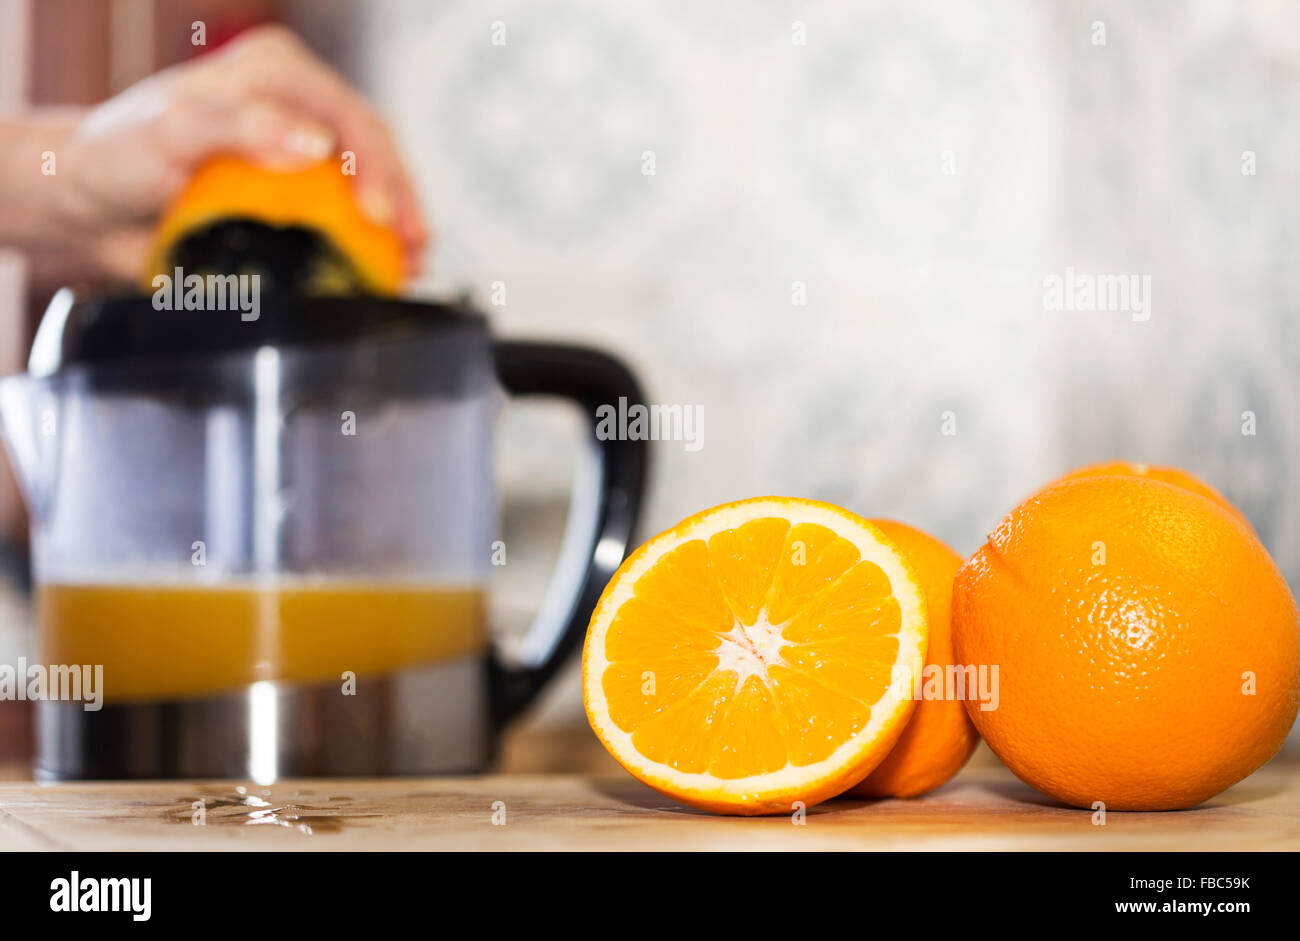 Squeezing orange to extract some healthy juice. Stock Photo